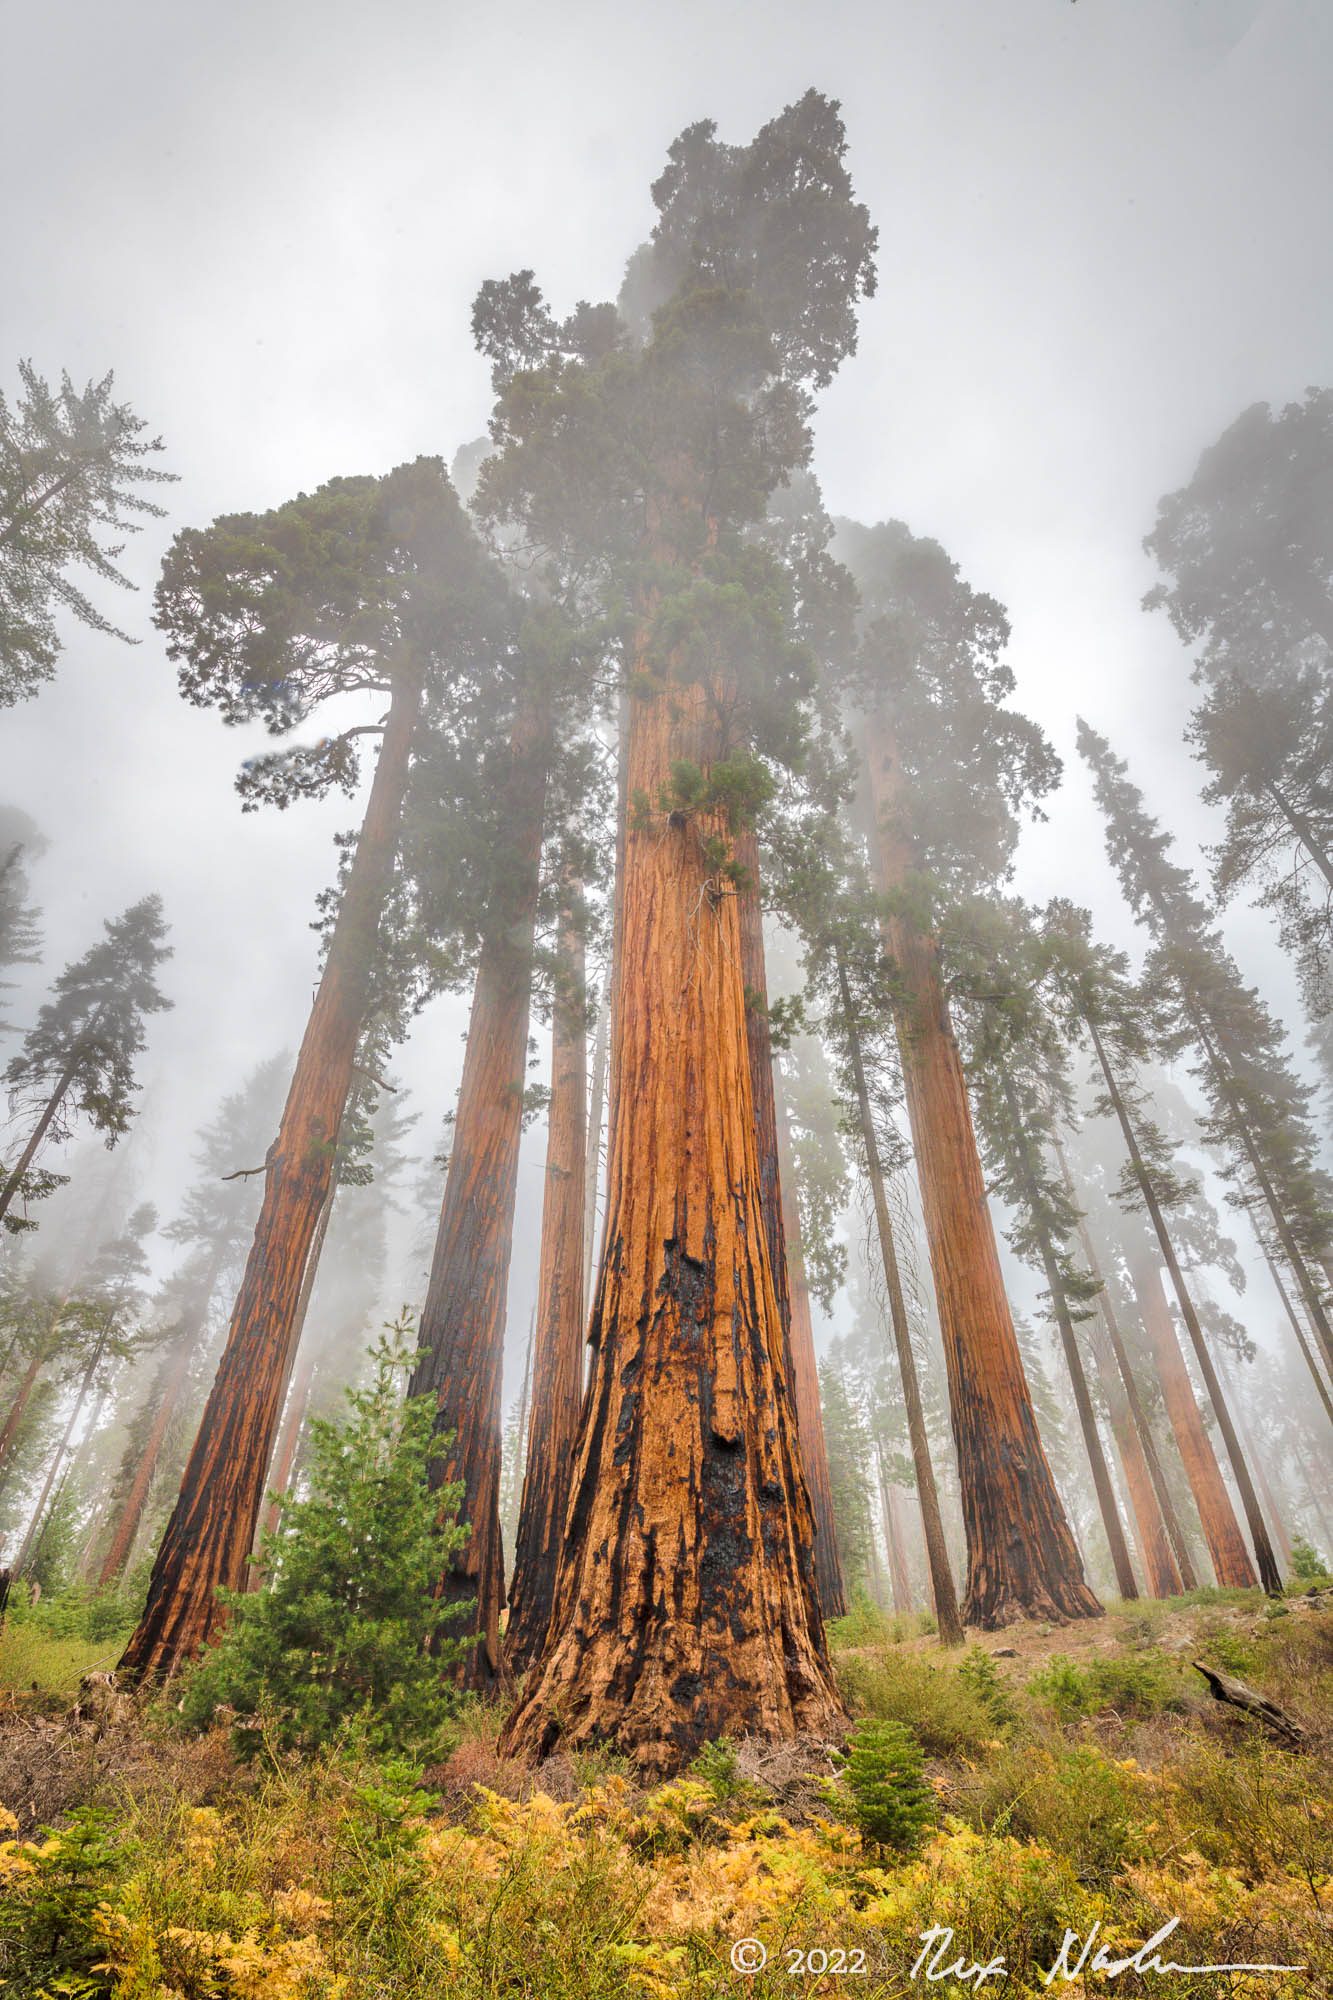 Giants in the Mist - Sequoia NP